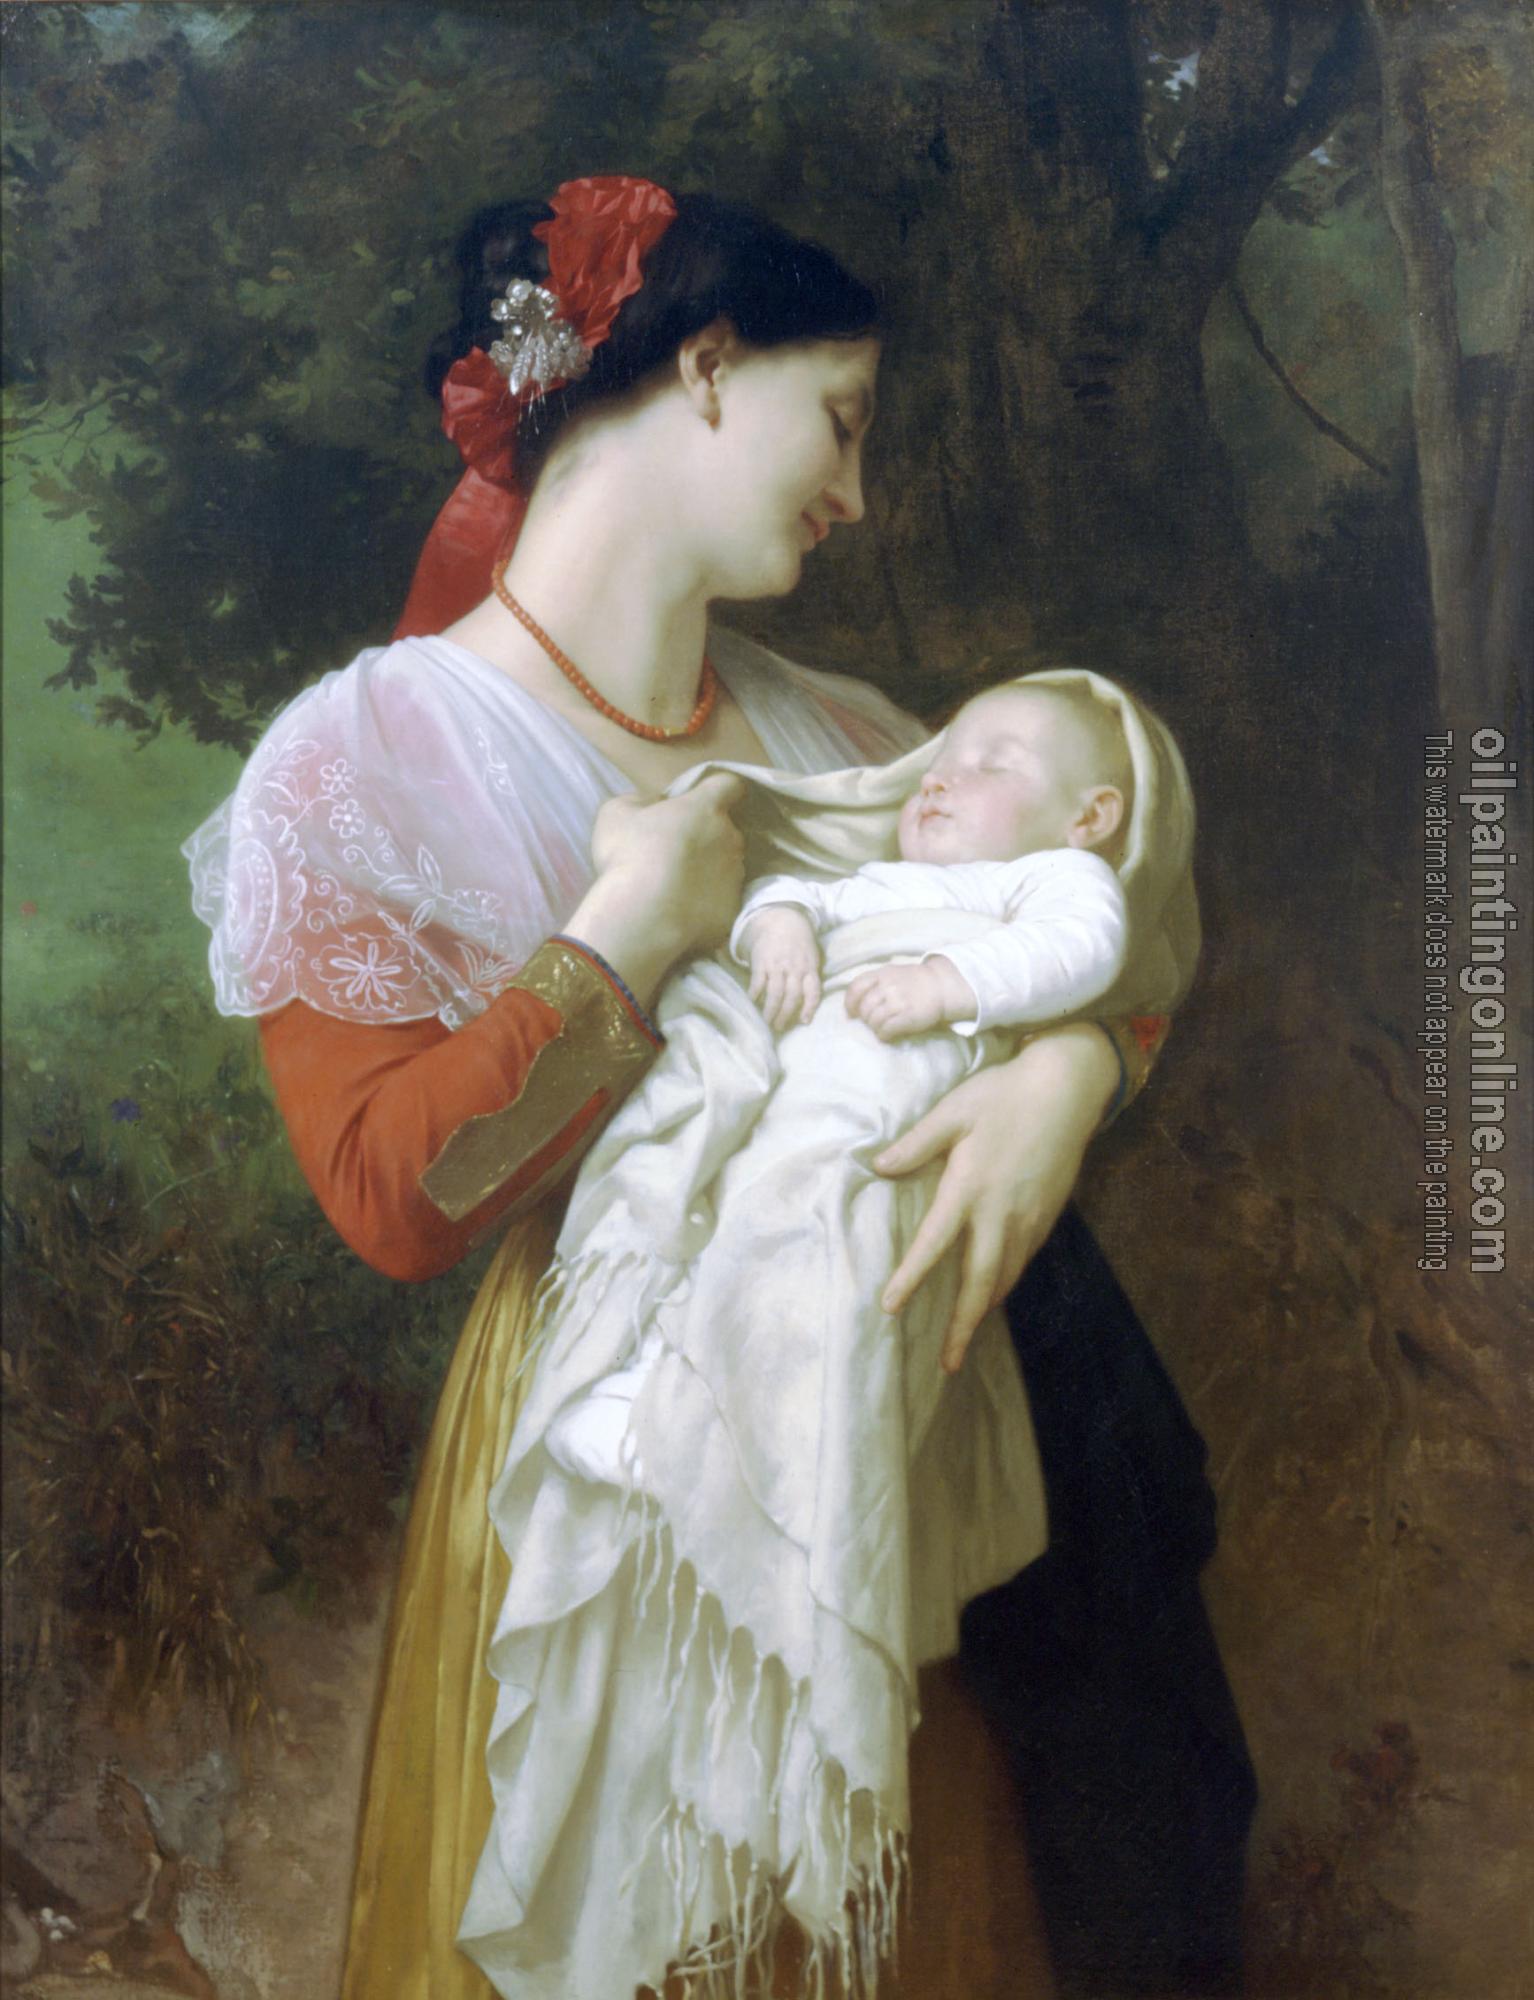 Bouguereau, William-Adolphe - Admiration Maternelle( Maternal Admiration)